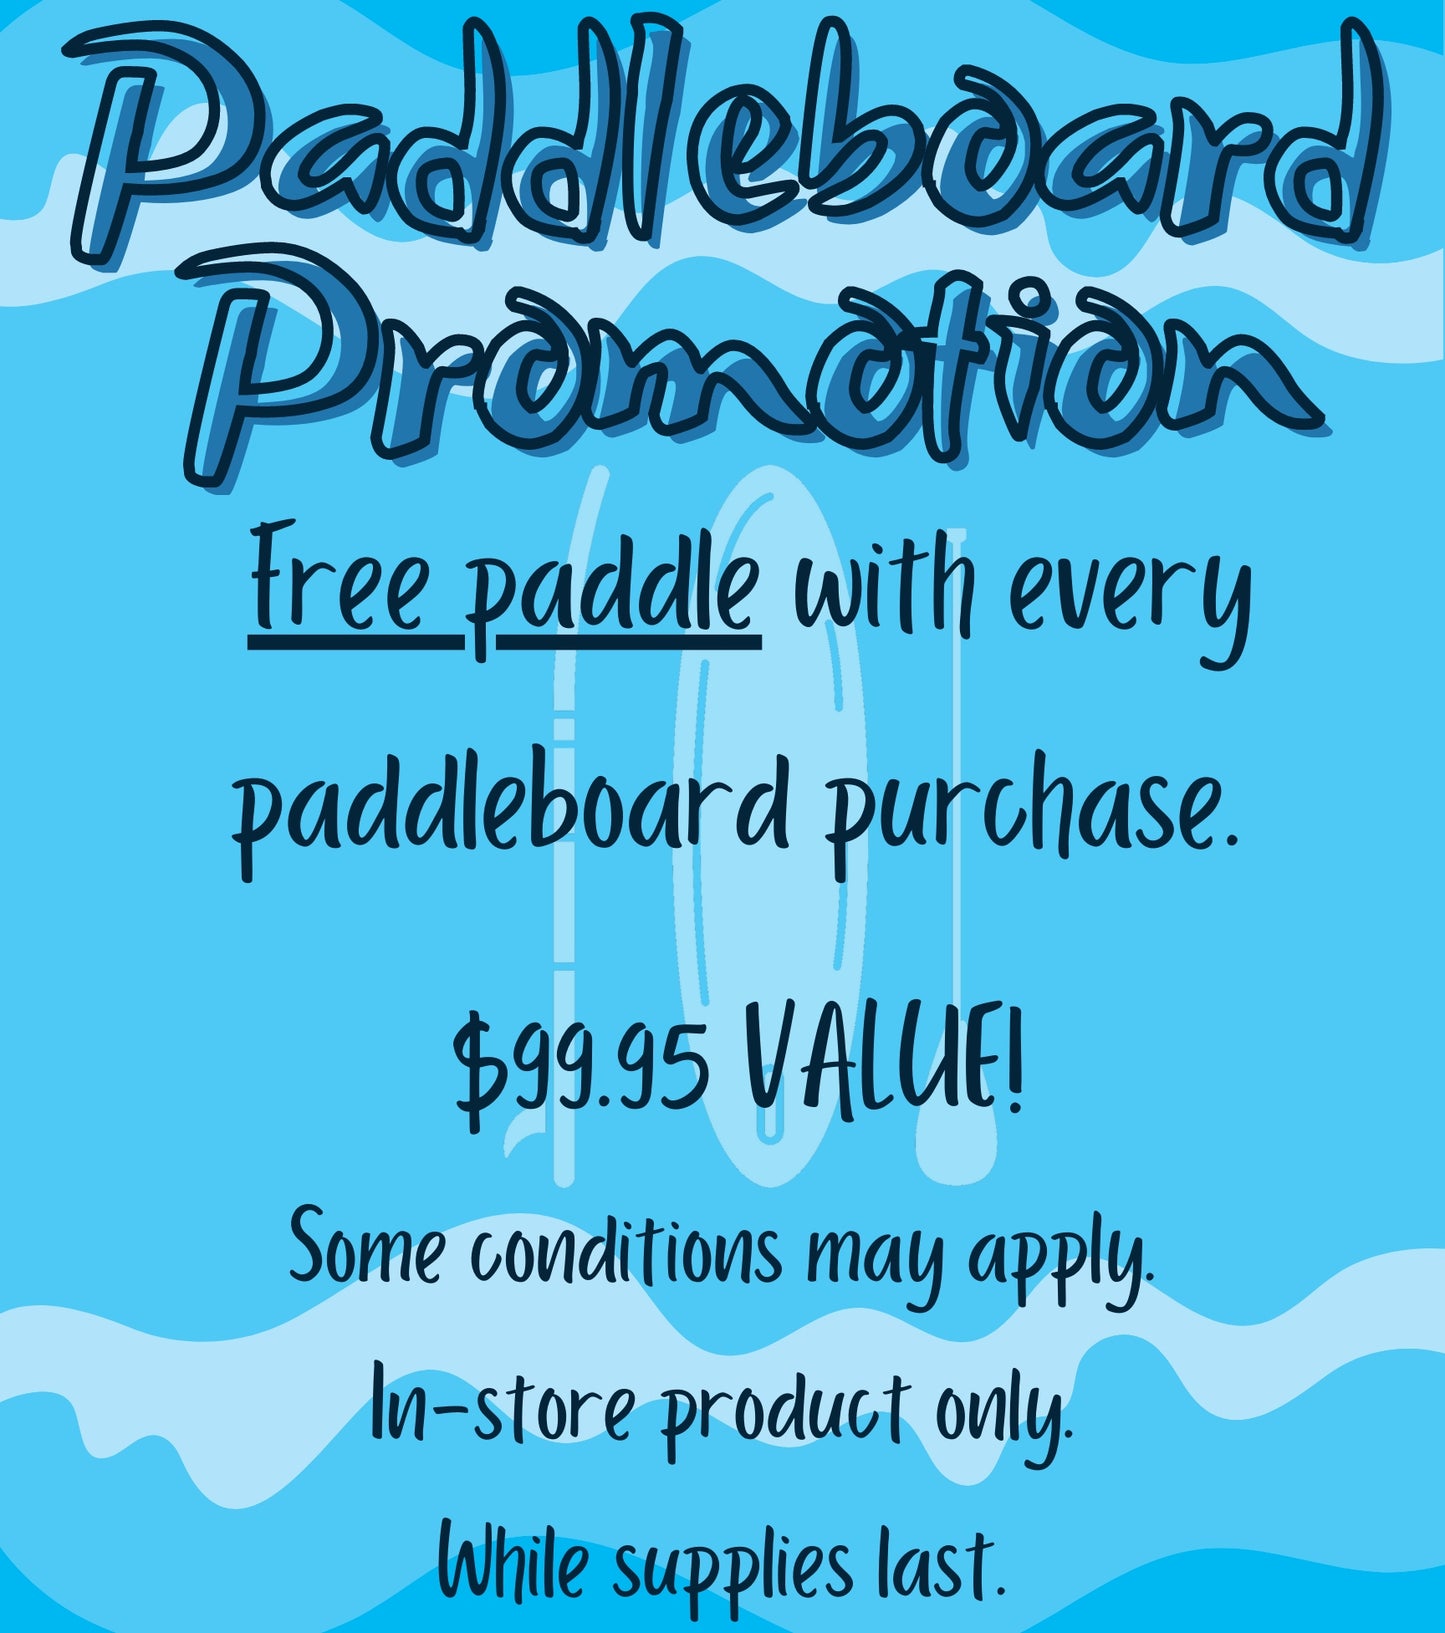 Paddleboard Promotion